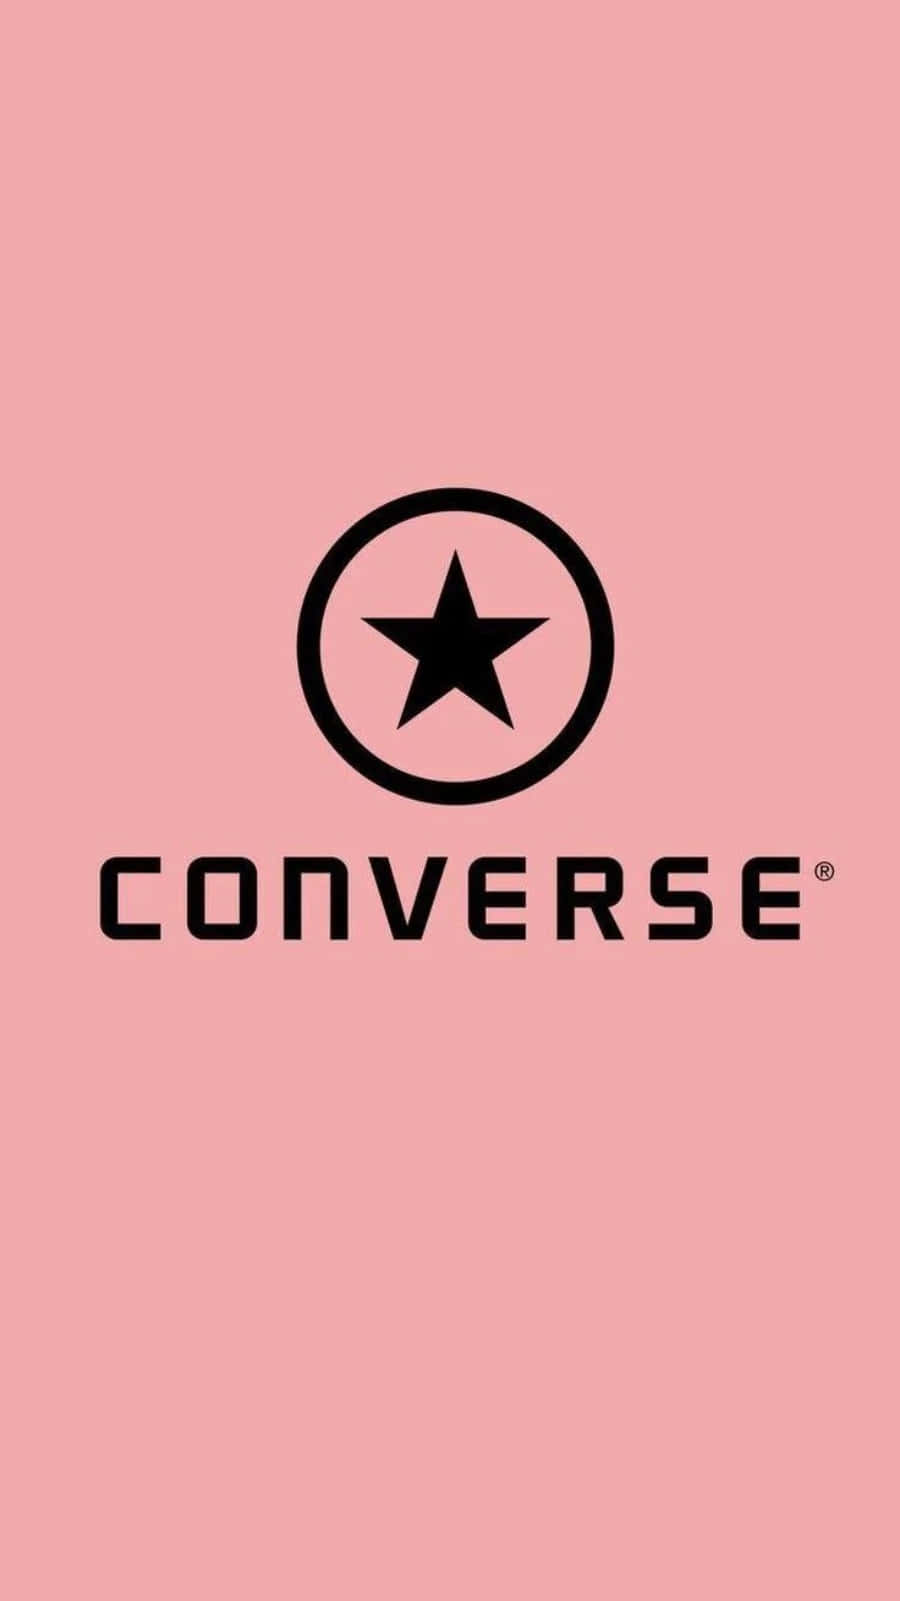 Classic Design, Iconic Logo: The Converse Brand